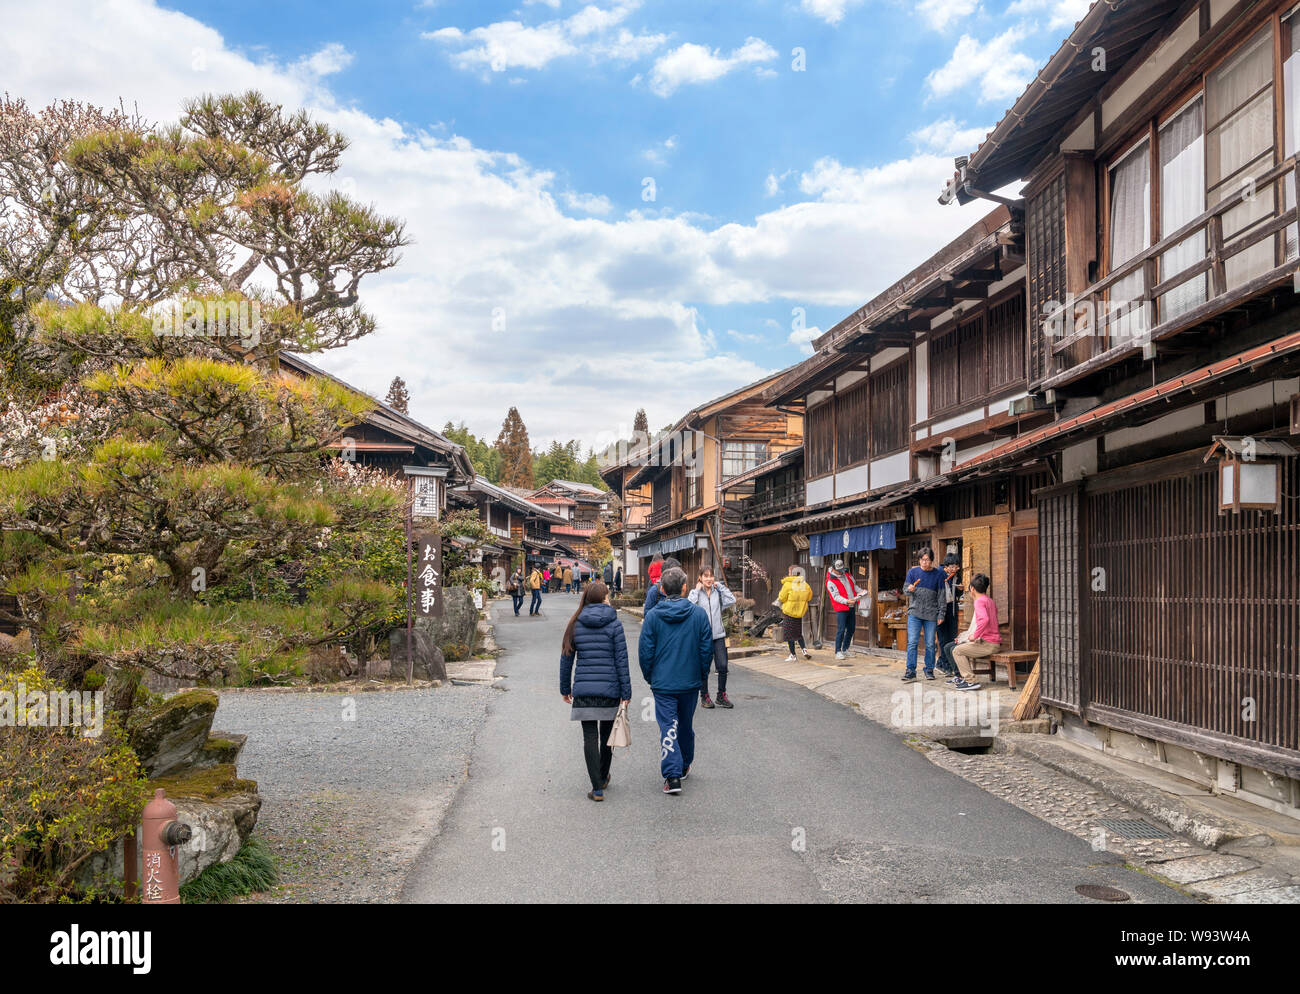 Visiteurs marchant dans la rue principale de la vieille ville de Tsumago (Tsumago-juku), Nagiso, district de Kiso, Nagano Prefecture, Japan Banque D'Images